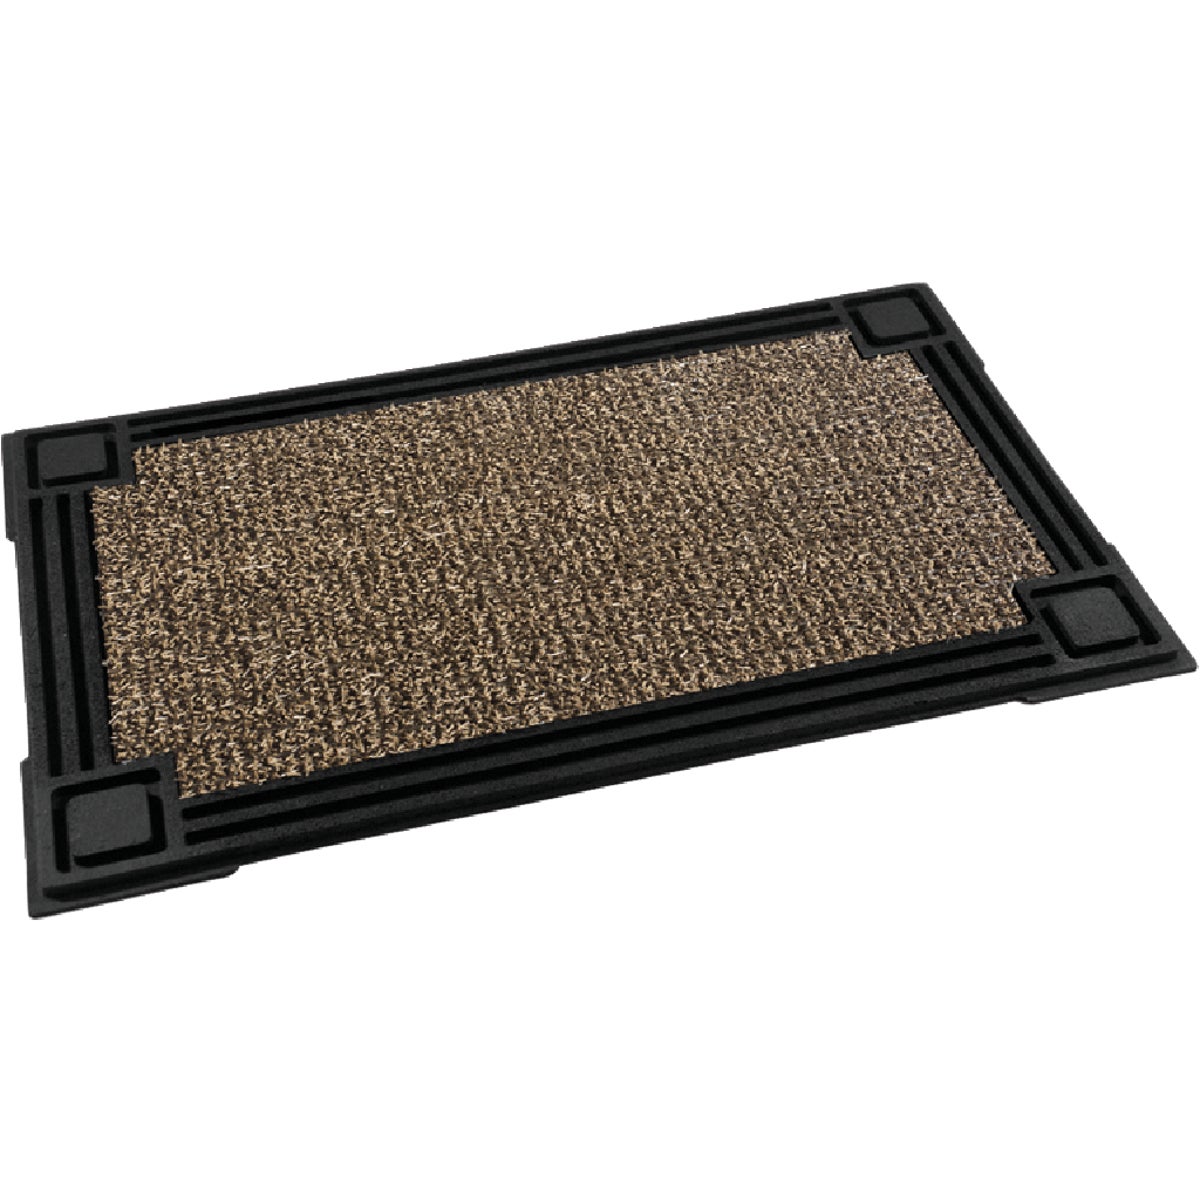 Item 606892, Premium door mat has cleaning blades that remove the dirt and debris 